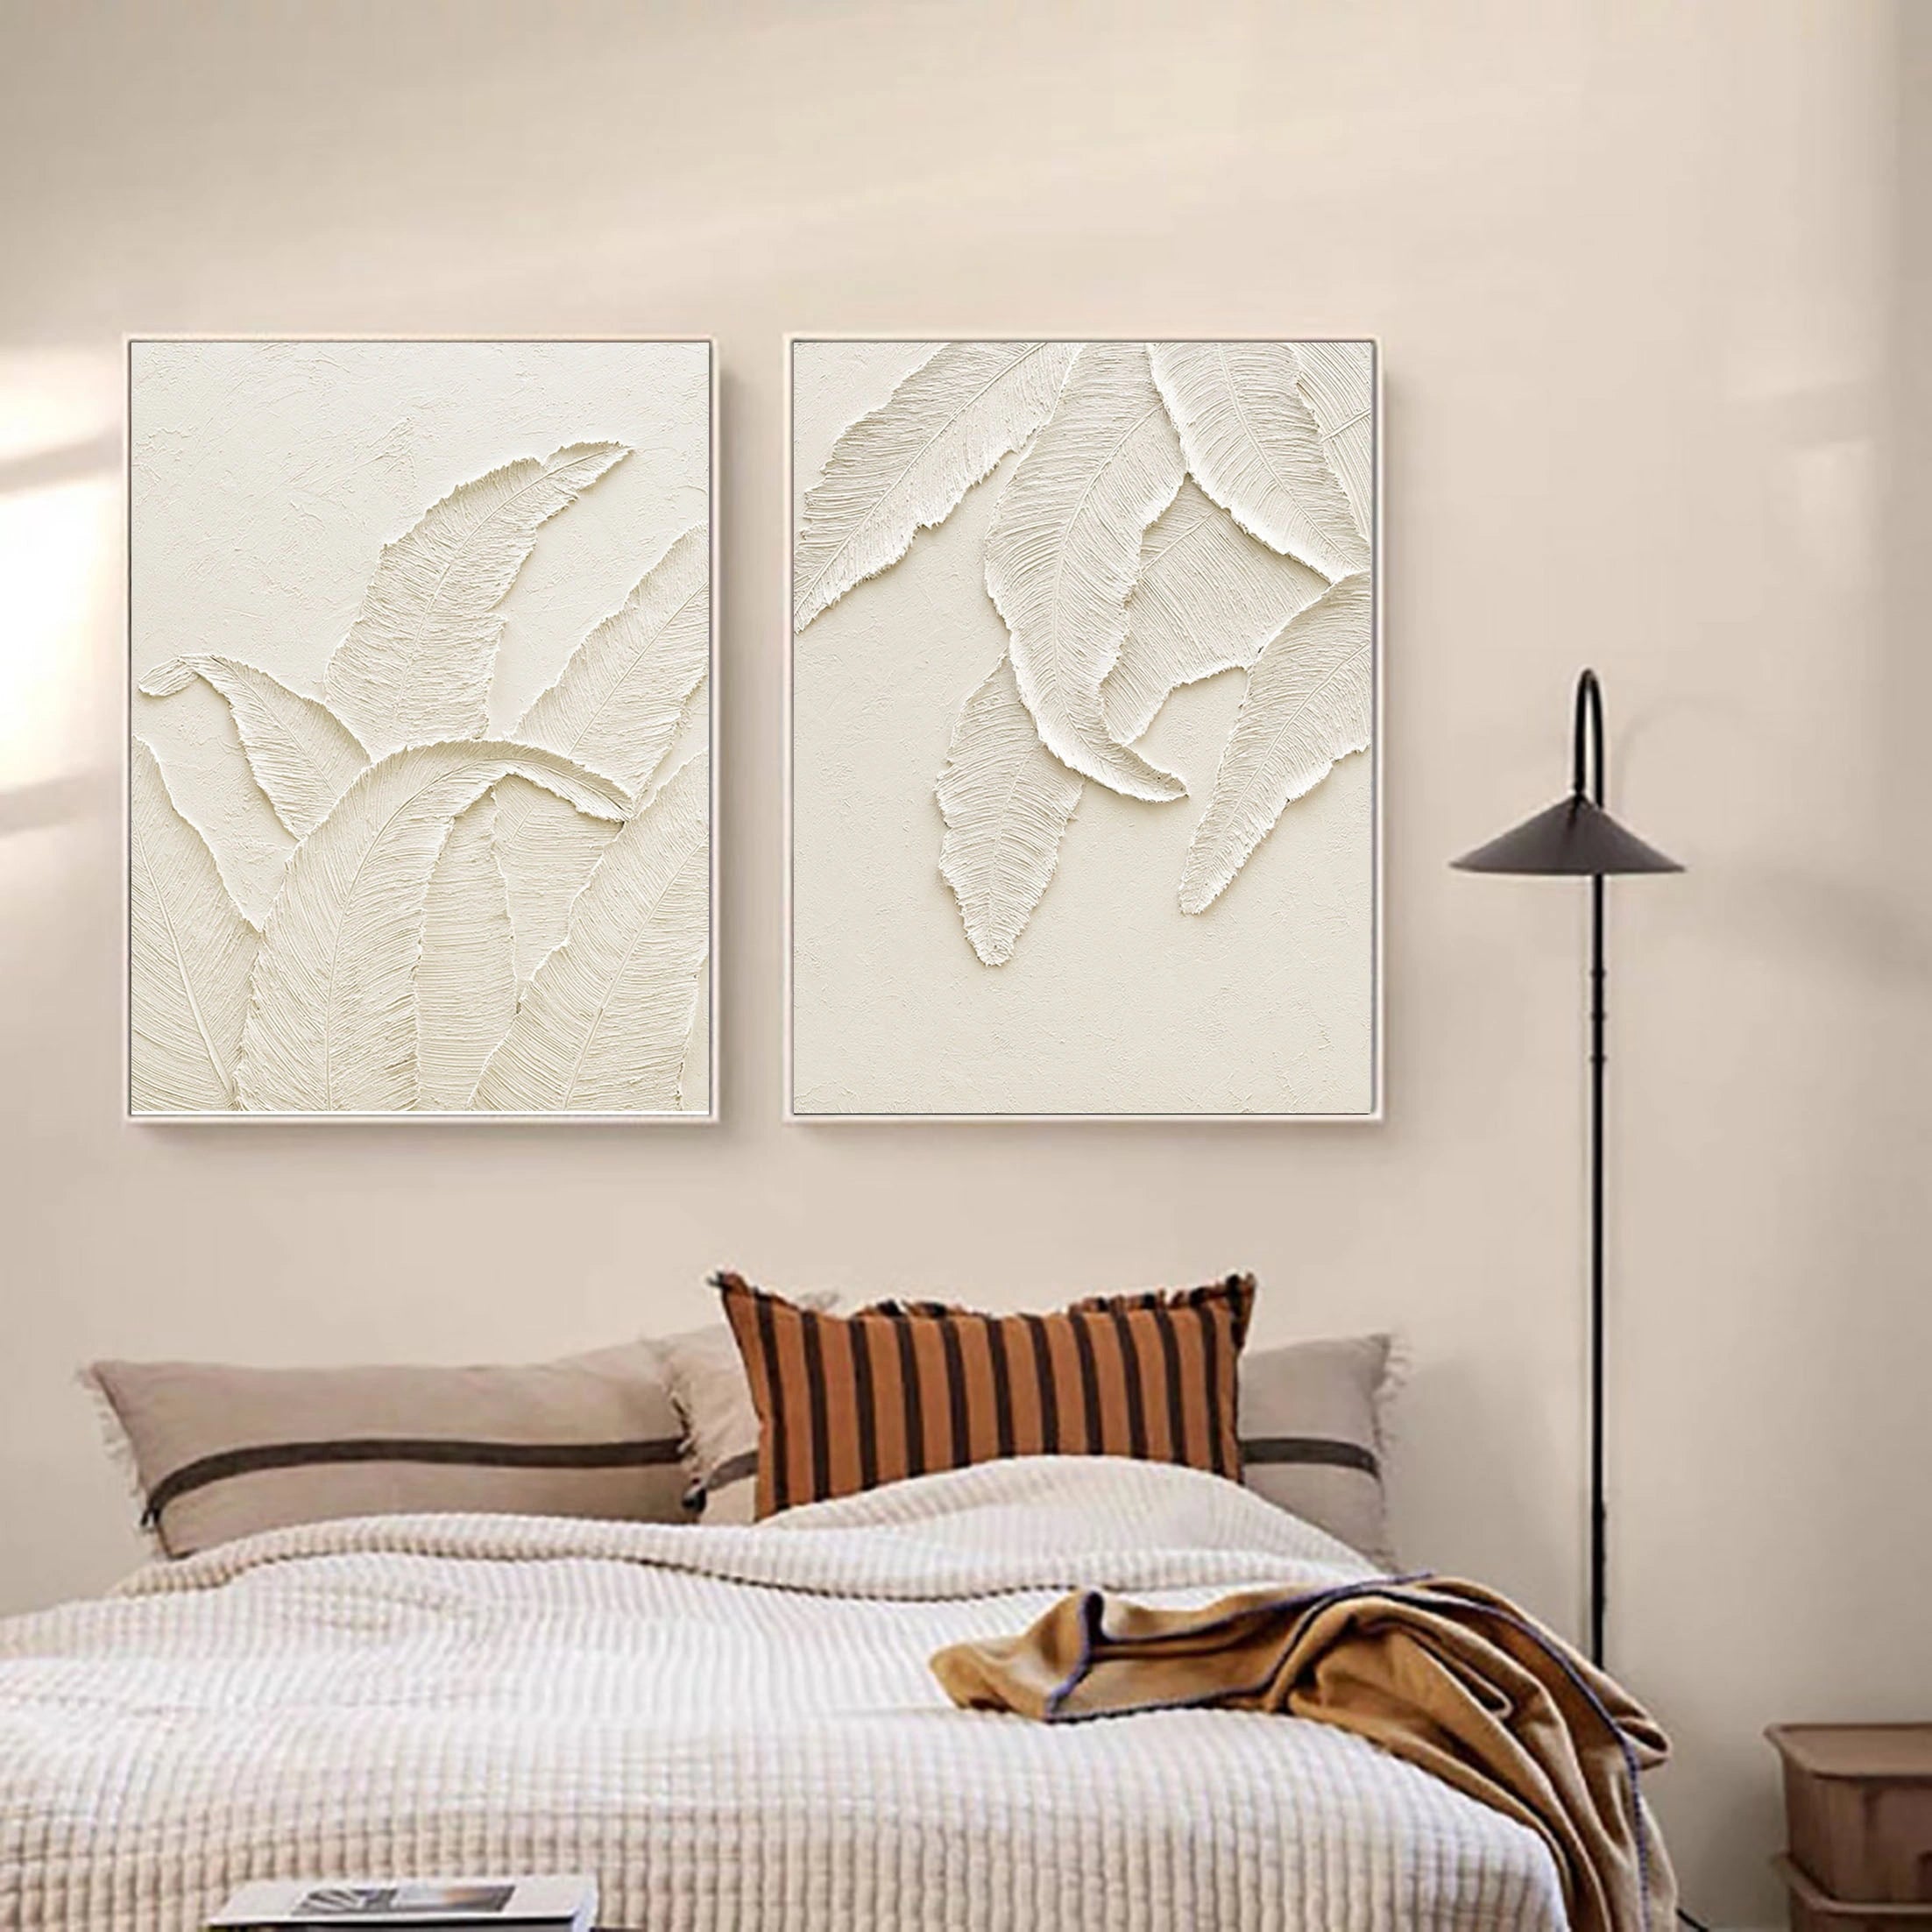 Set of 2 Plaster Art Painting Minimalistic Wall Artwork for Room Decor